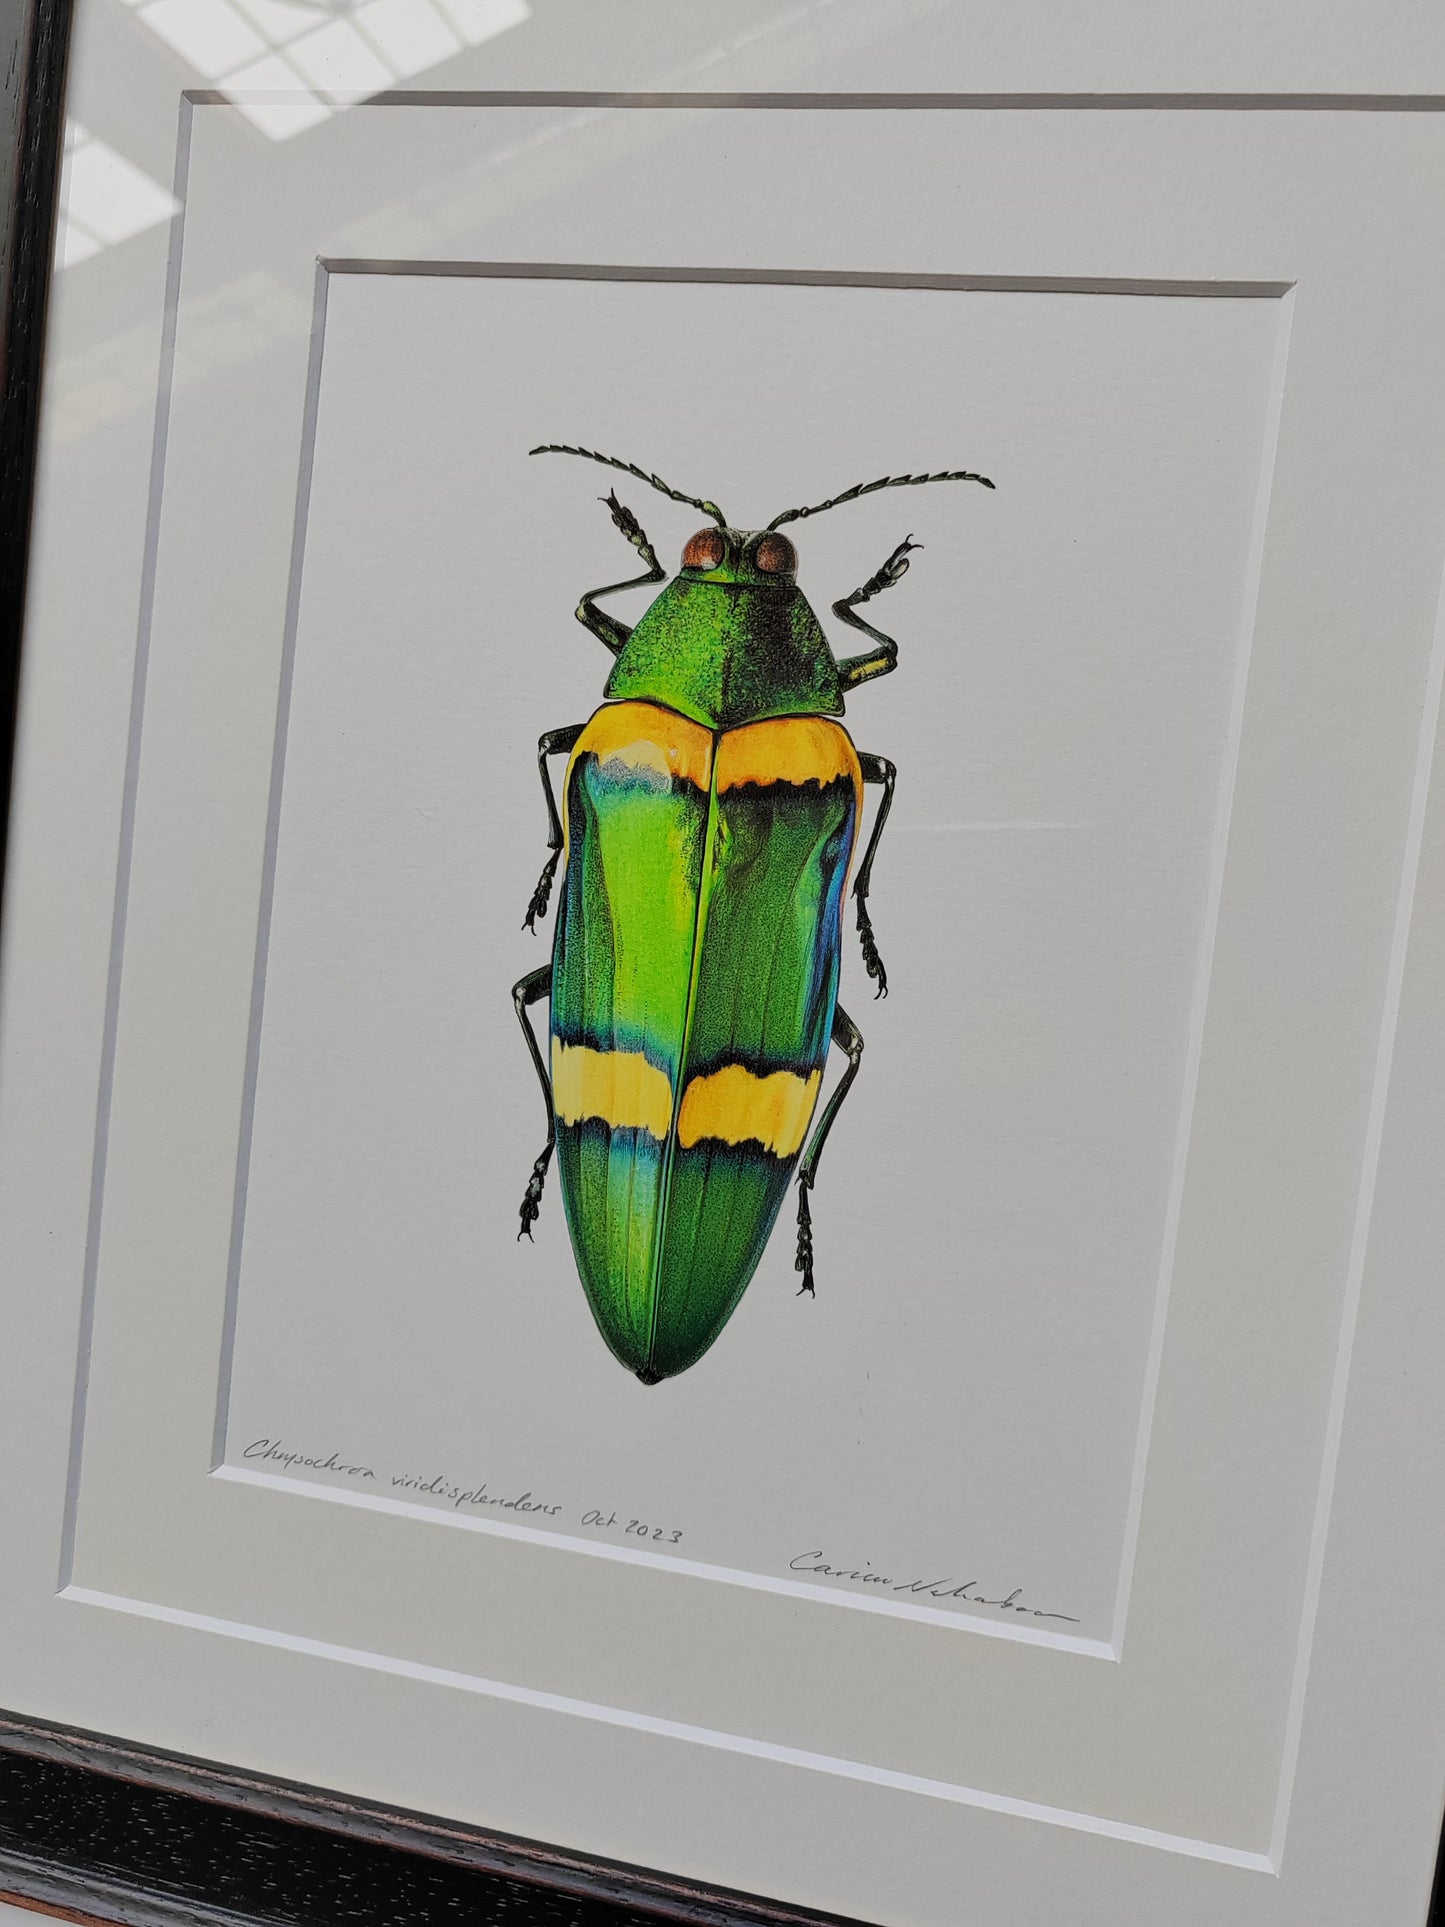 Framed Original Artwork - Chrysochroa viridisplendens, Jewel Beetle